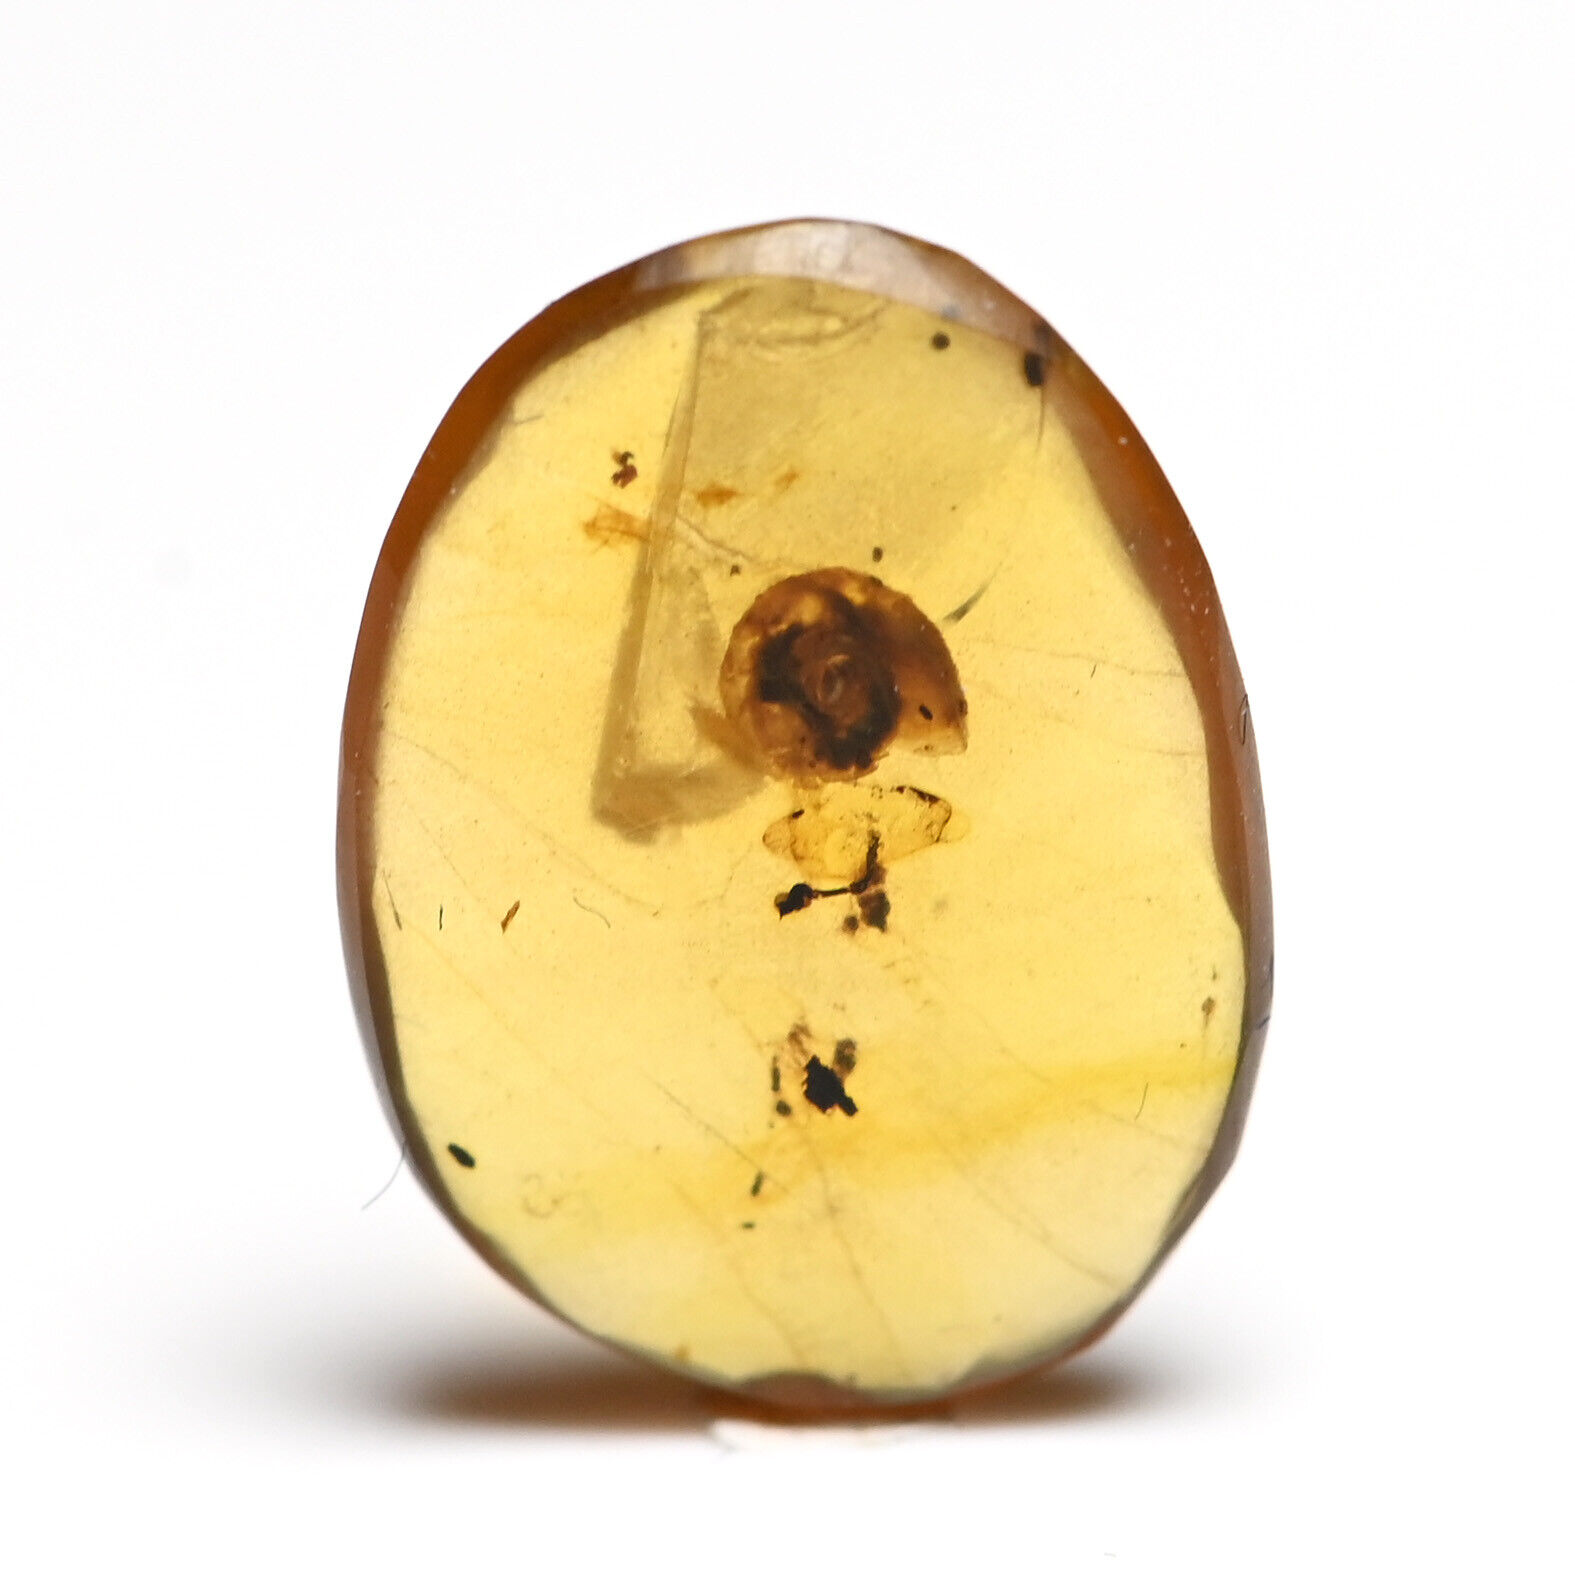 Scarce Gastropoda (Land Snail), in Burmese Amber